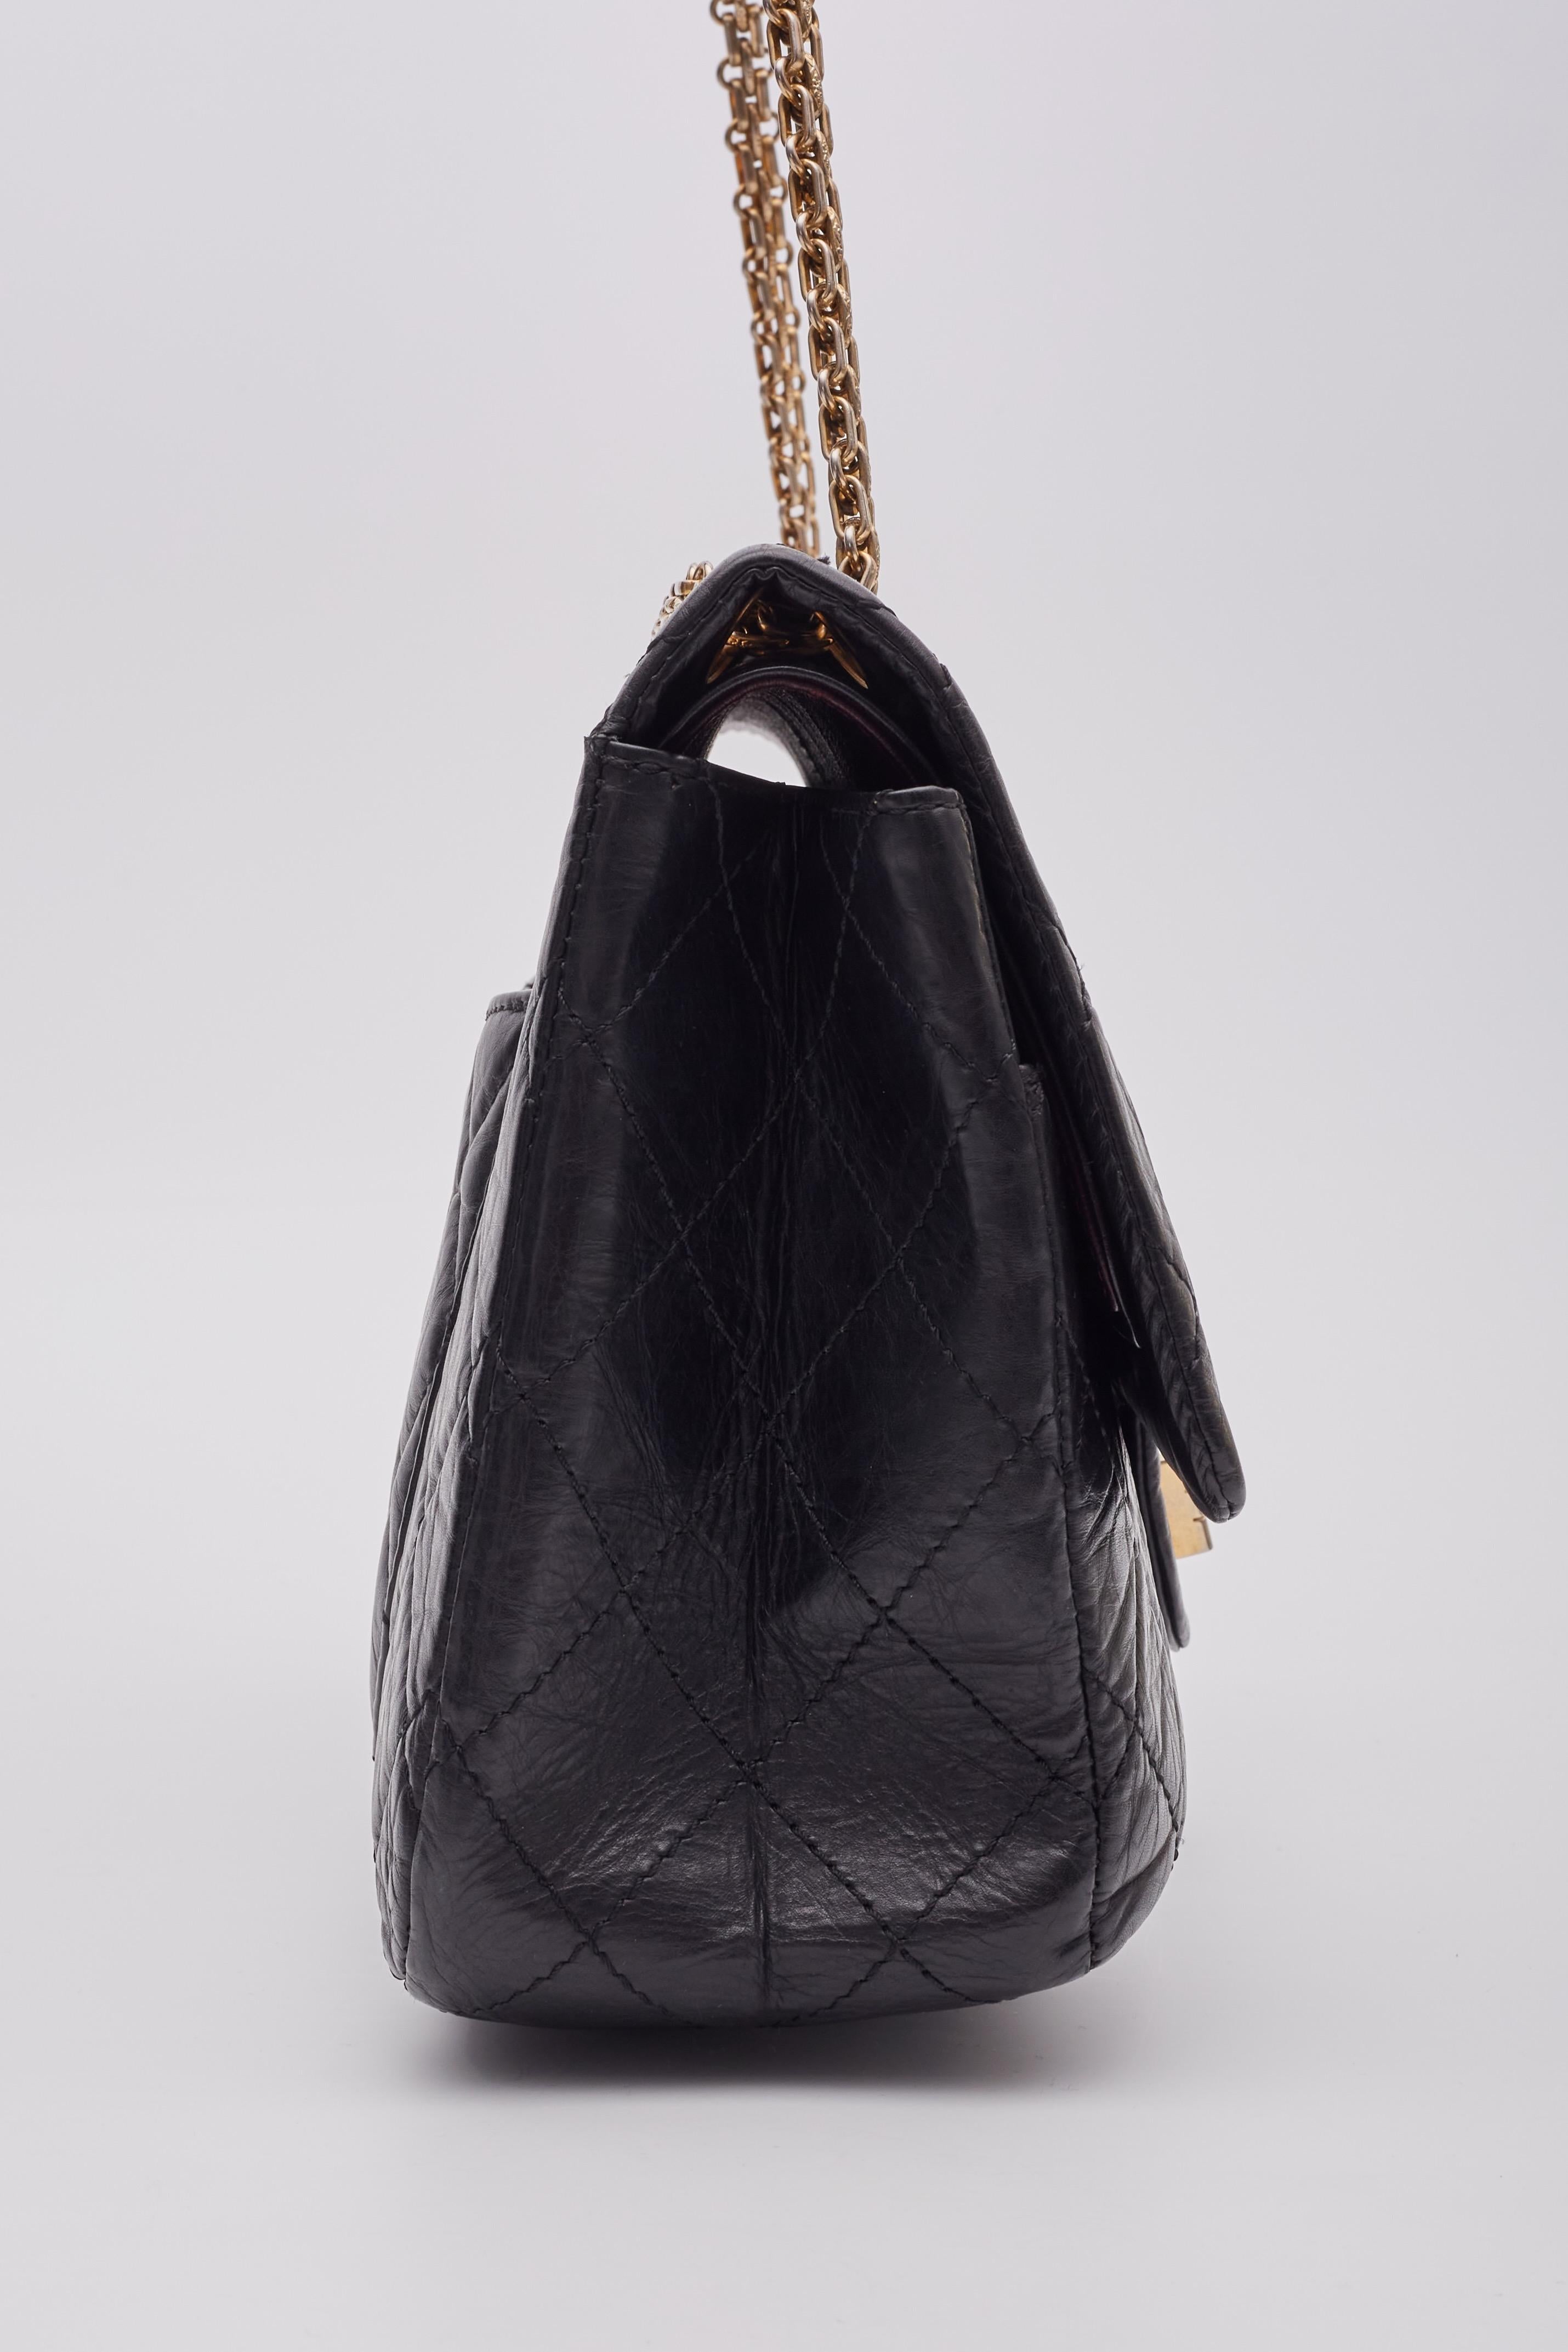 Chanel Calfskin Black Reissue 2.55 227 Flap Bag For Sale 4